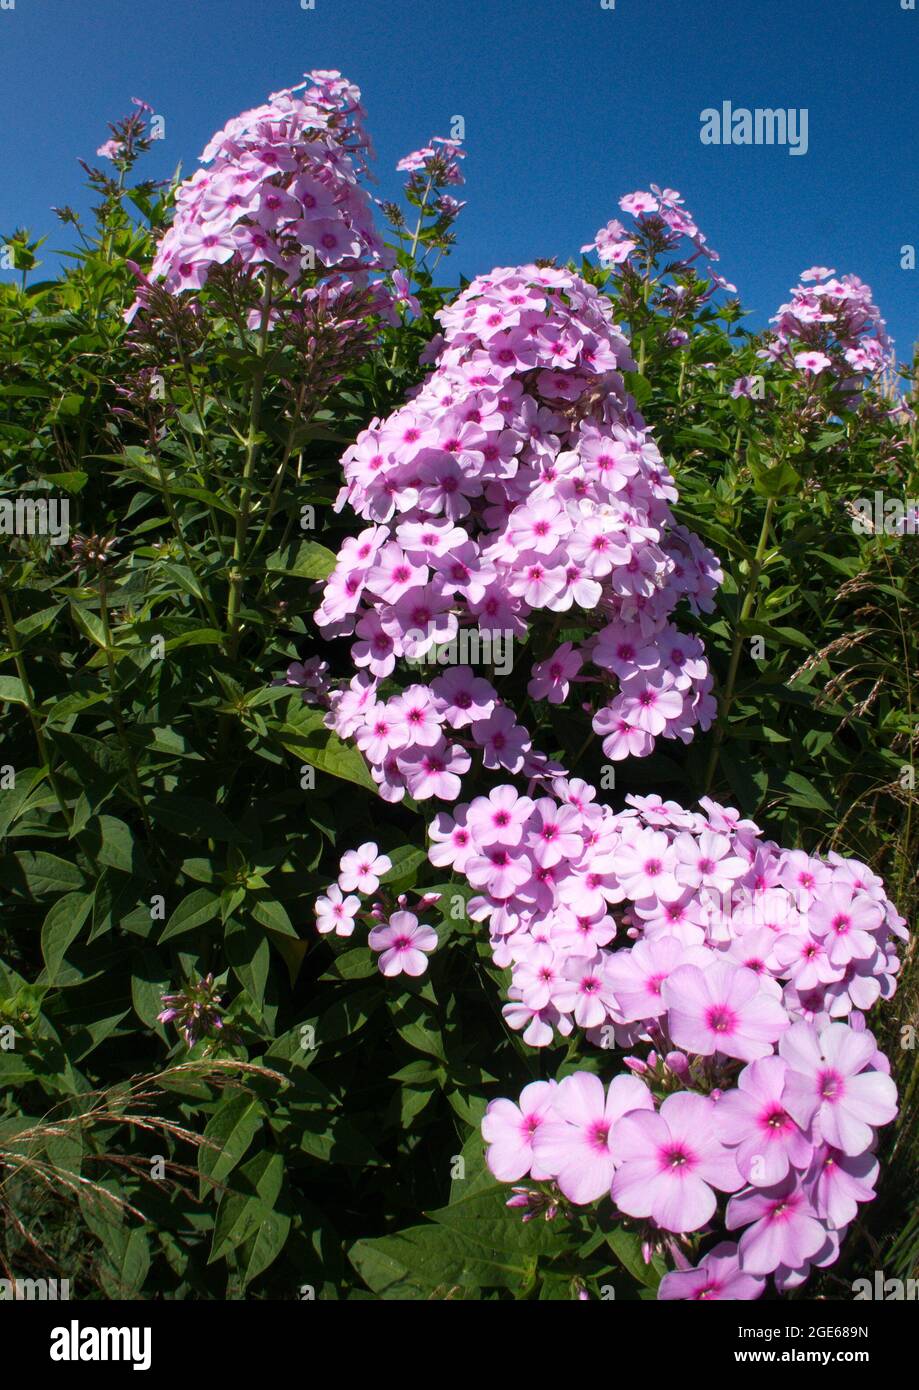 Phlox flower Stock Photo